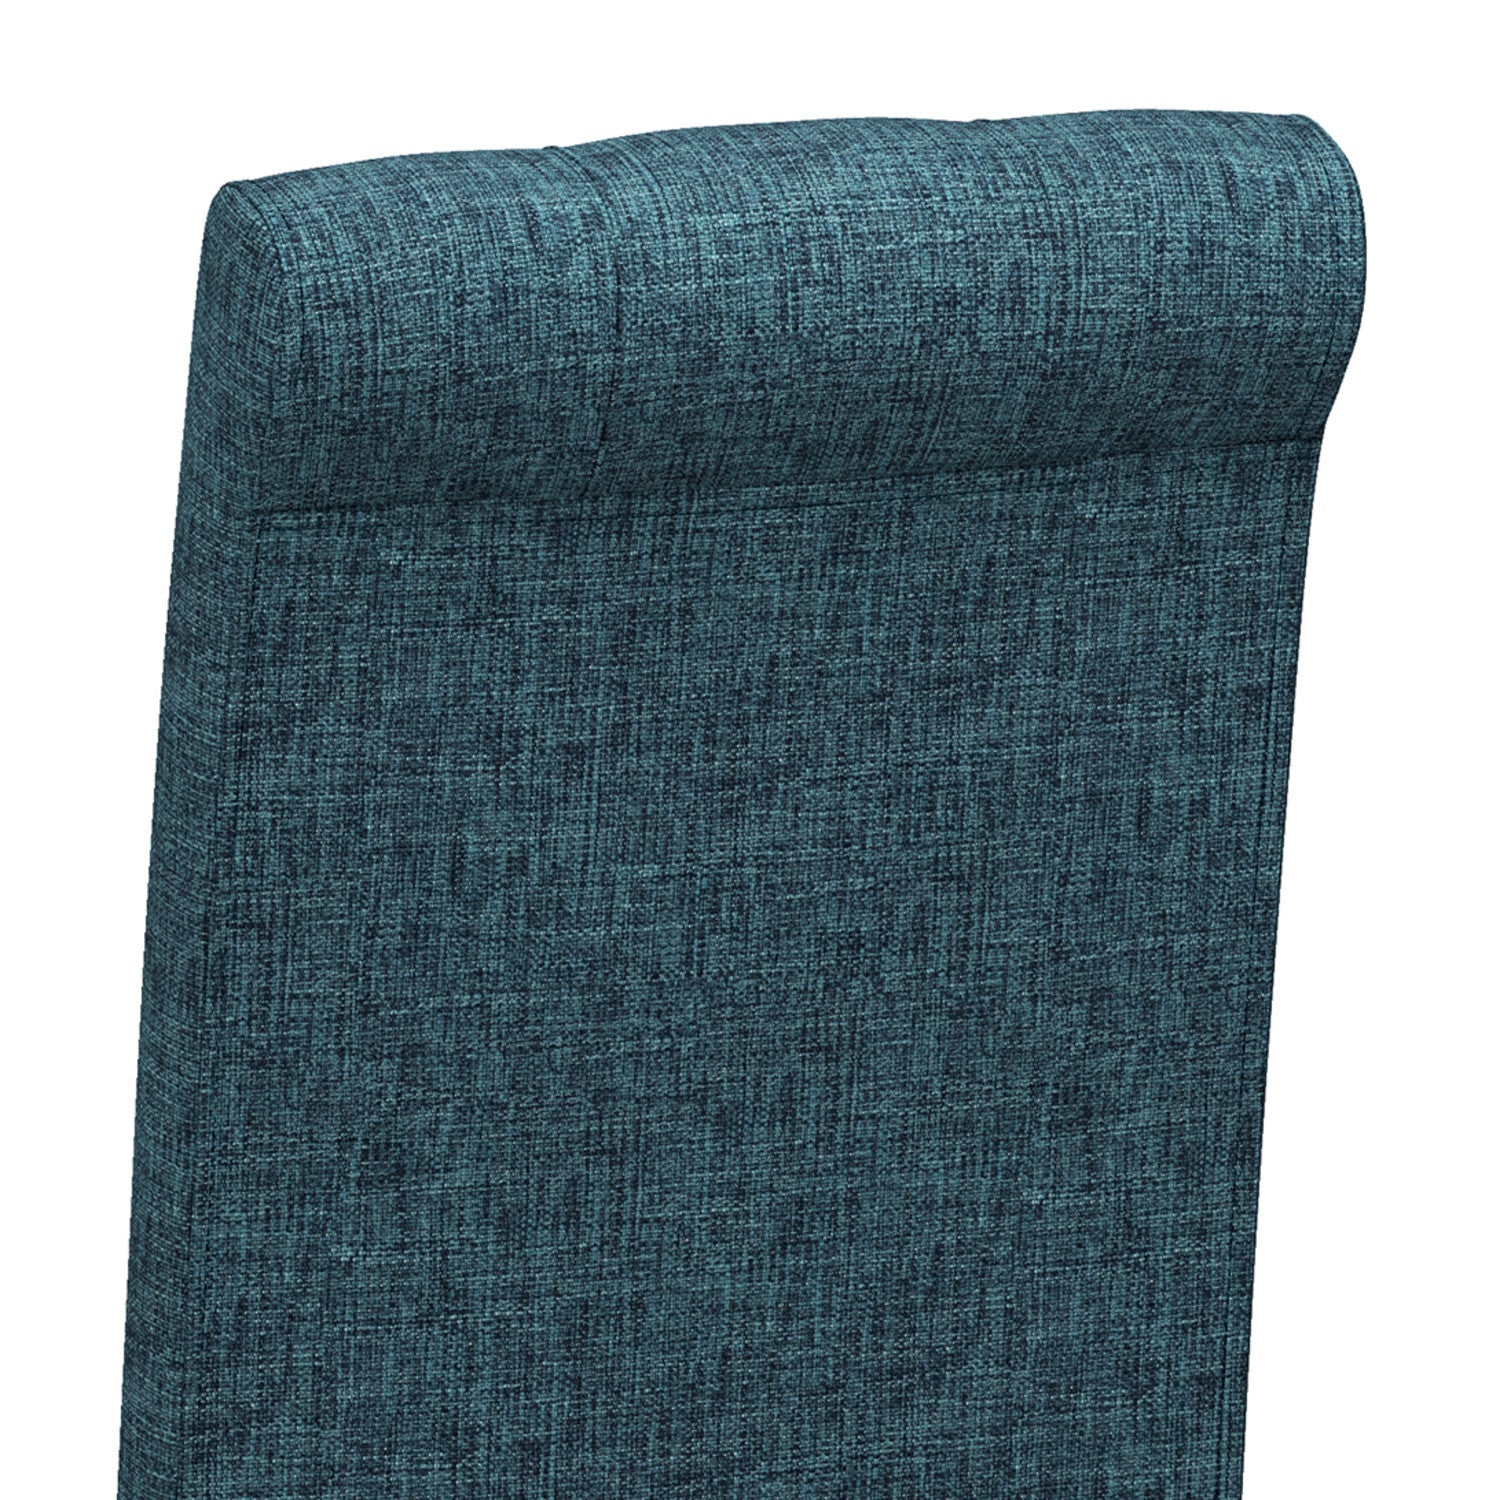 Denim Blue Linen Style Fabric | Cosmopolitan Dining Chair in Linen